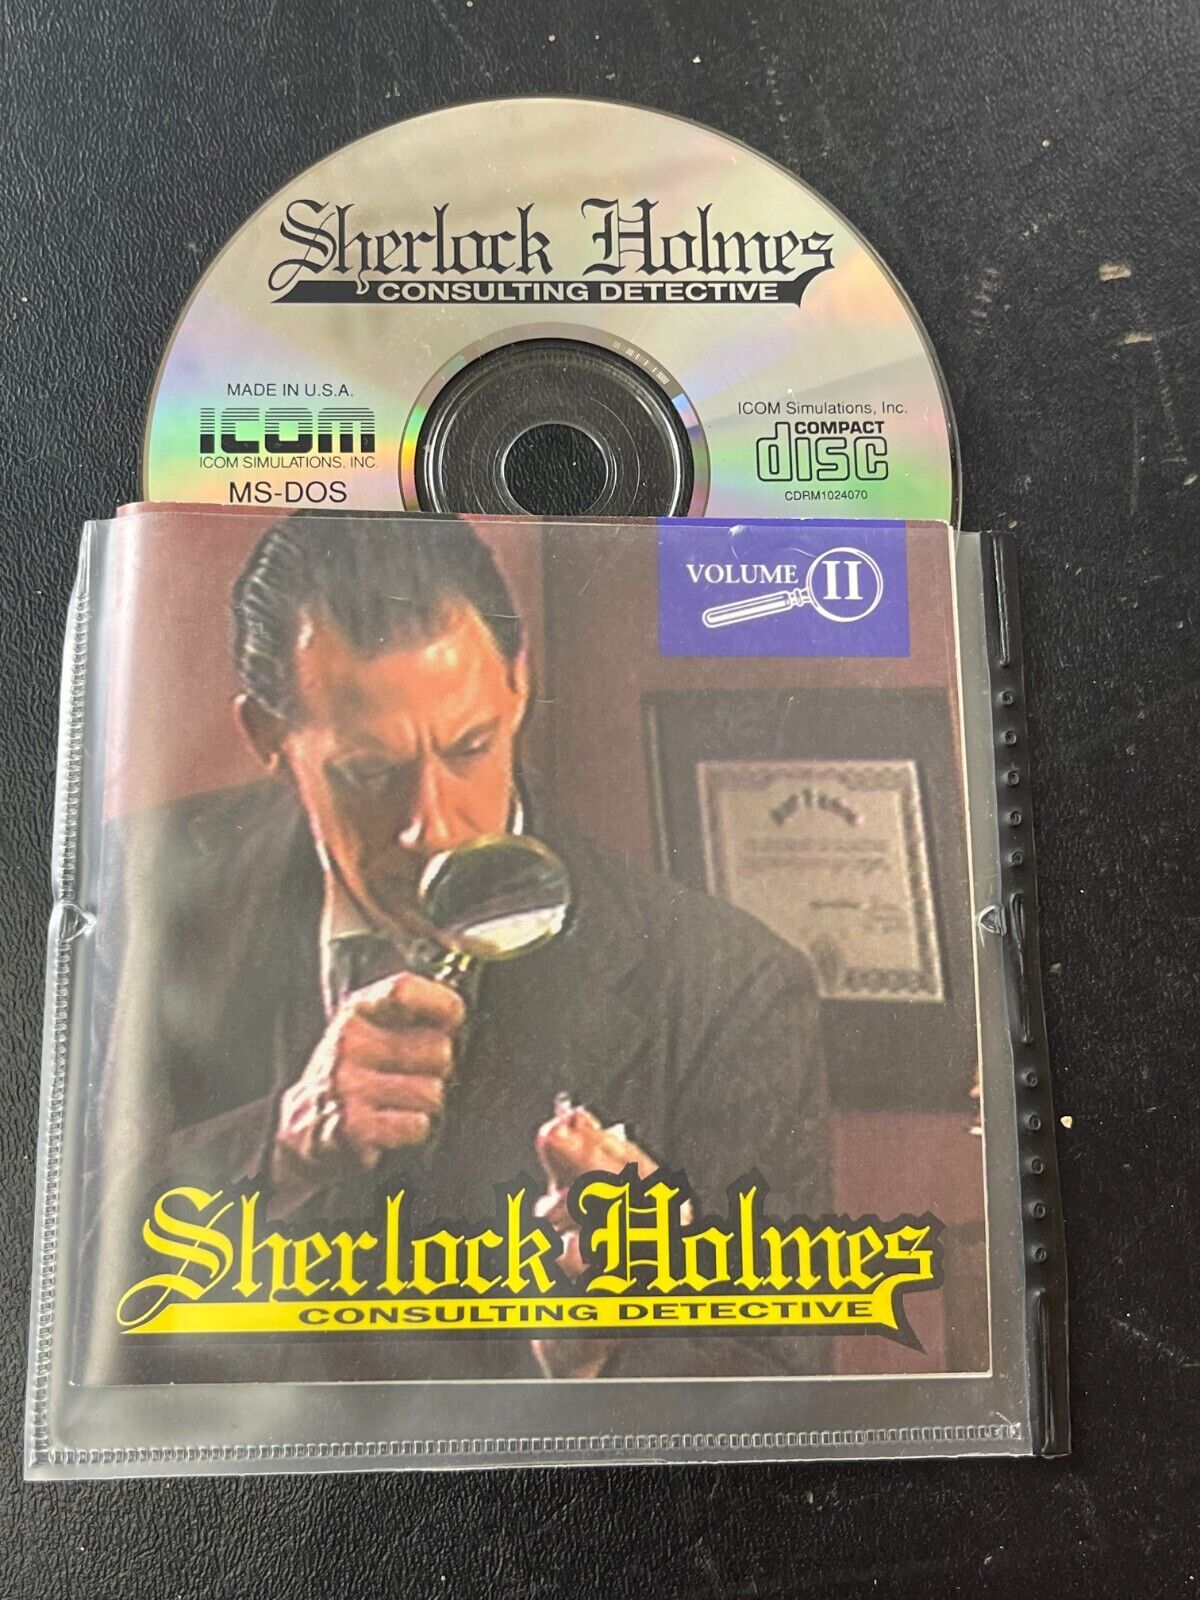 Sherlock Holmes Consulting Detective Vol 2 CD ROM Media